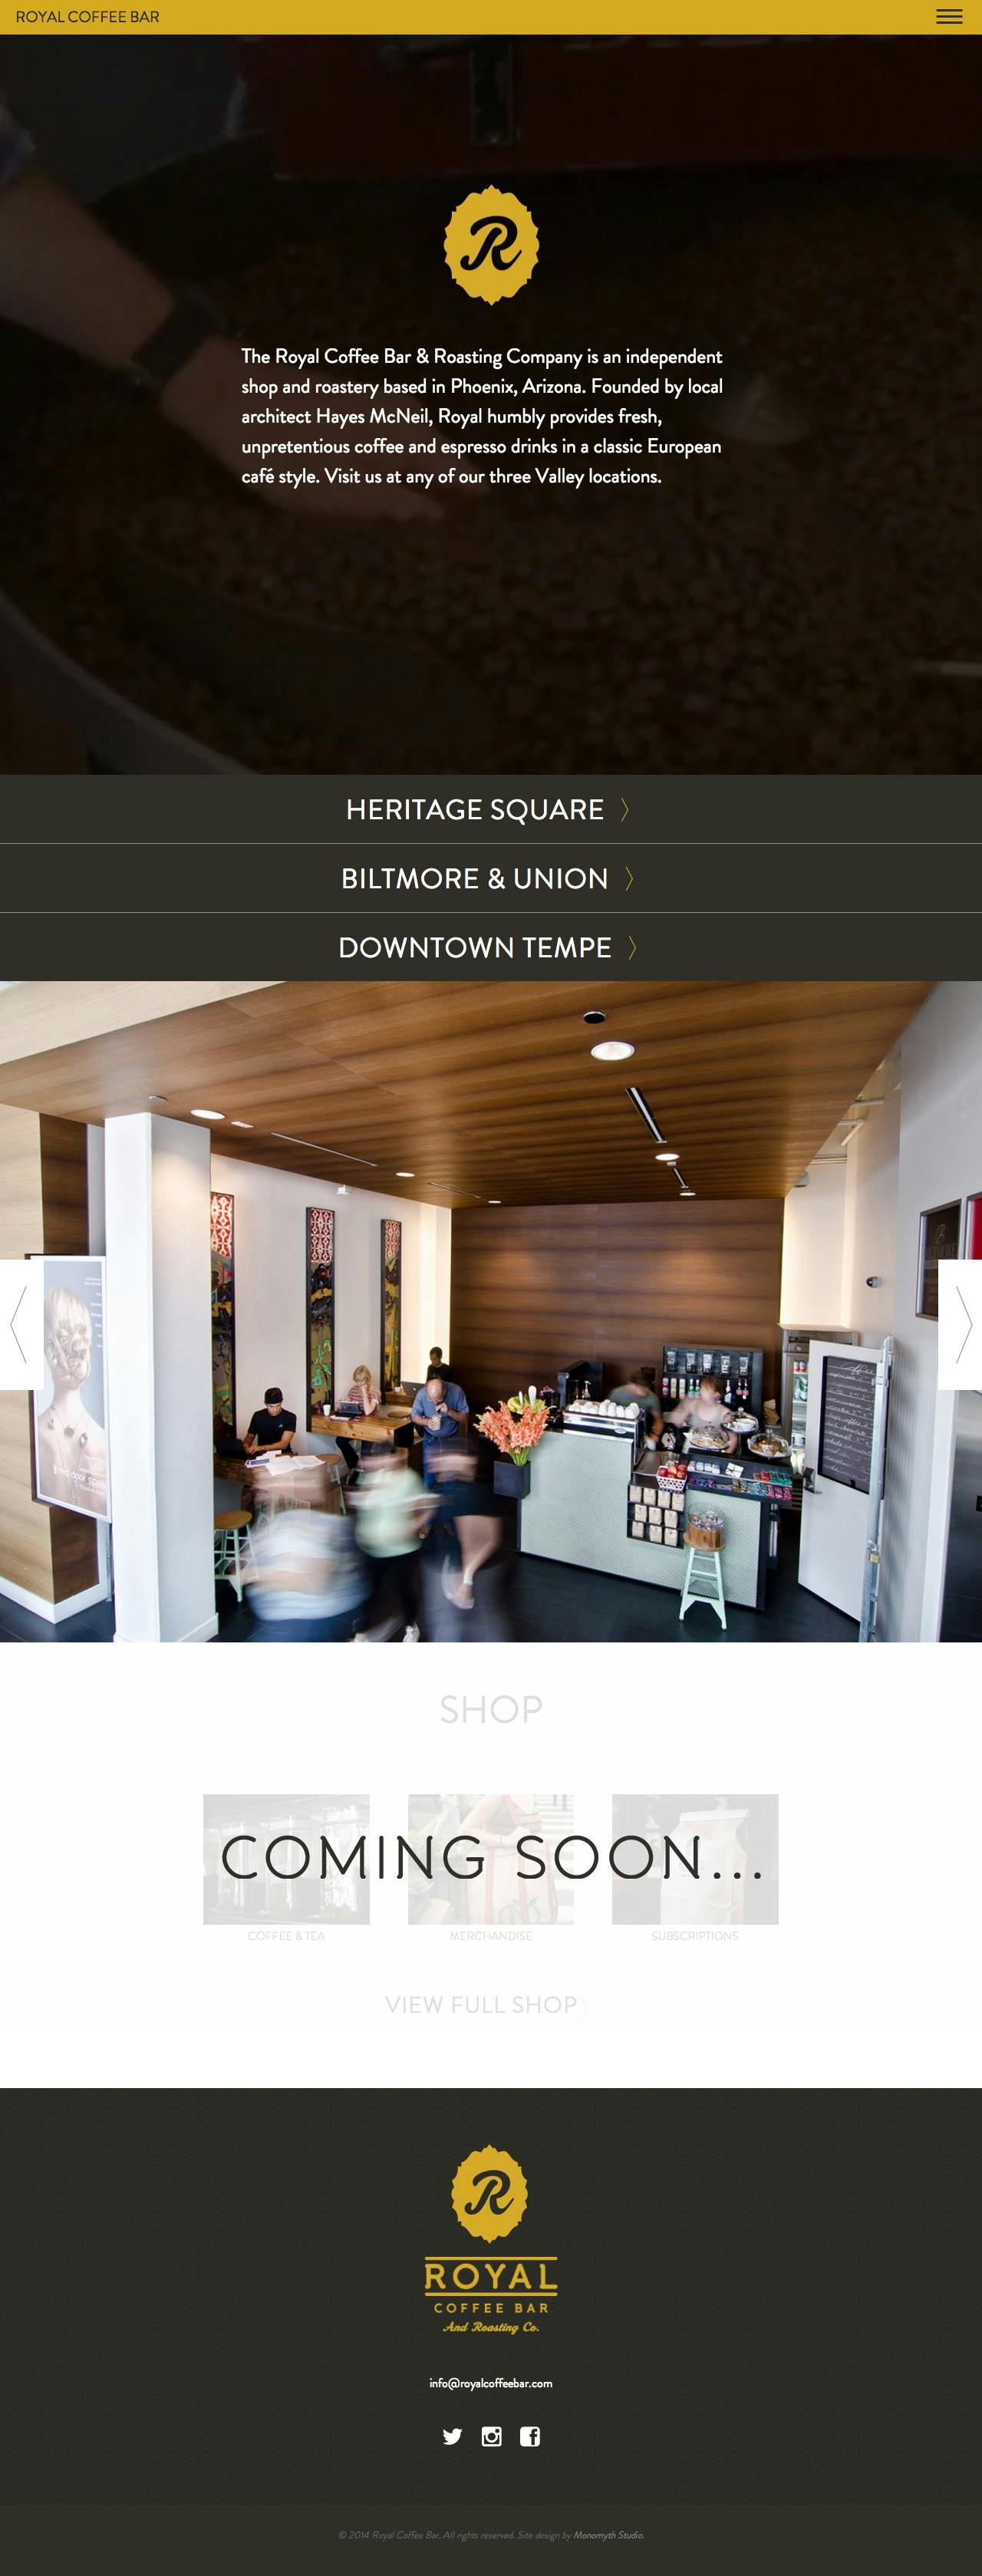 Royal Coffee Bar Website Screenshot